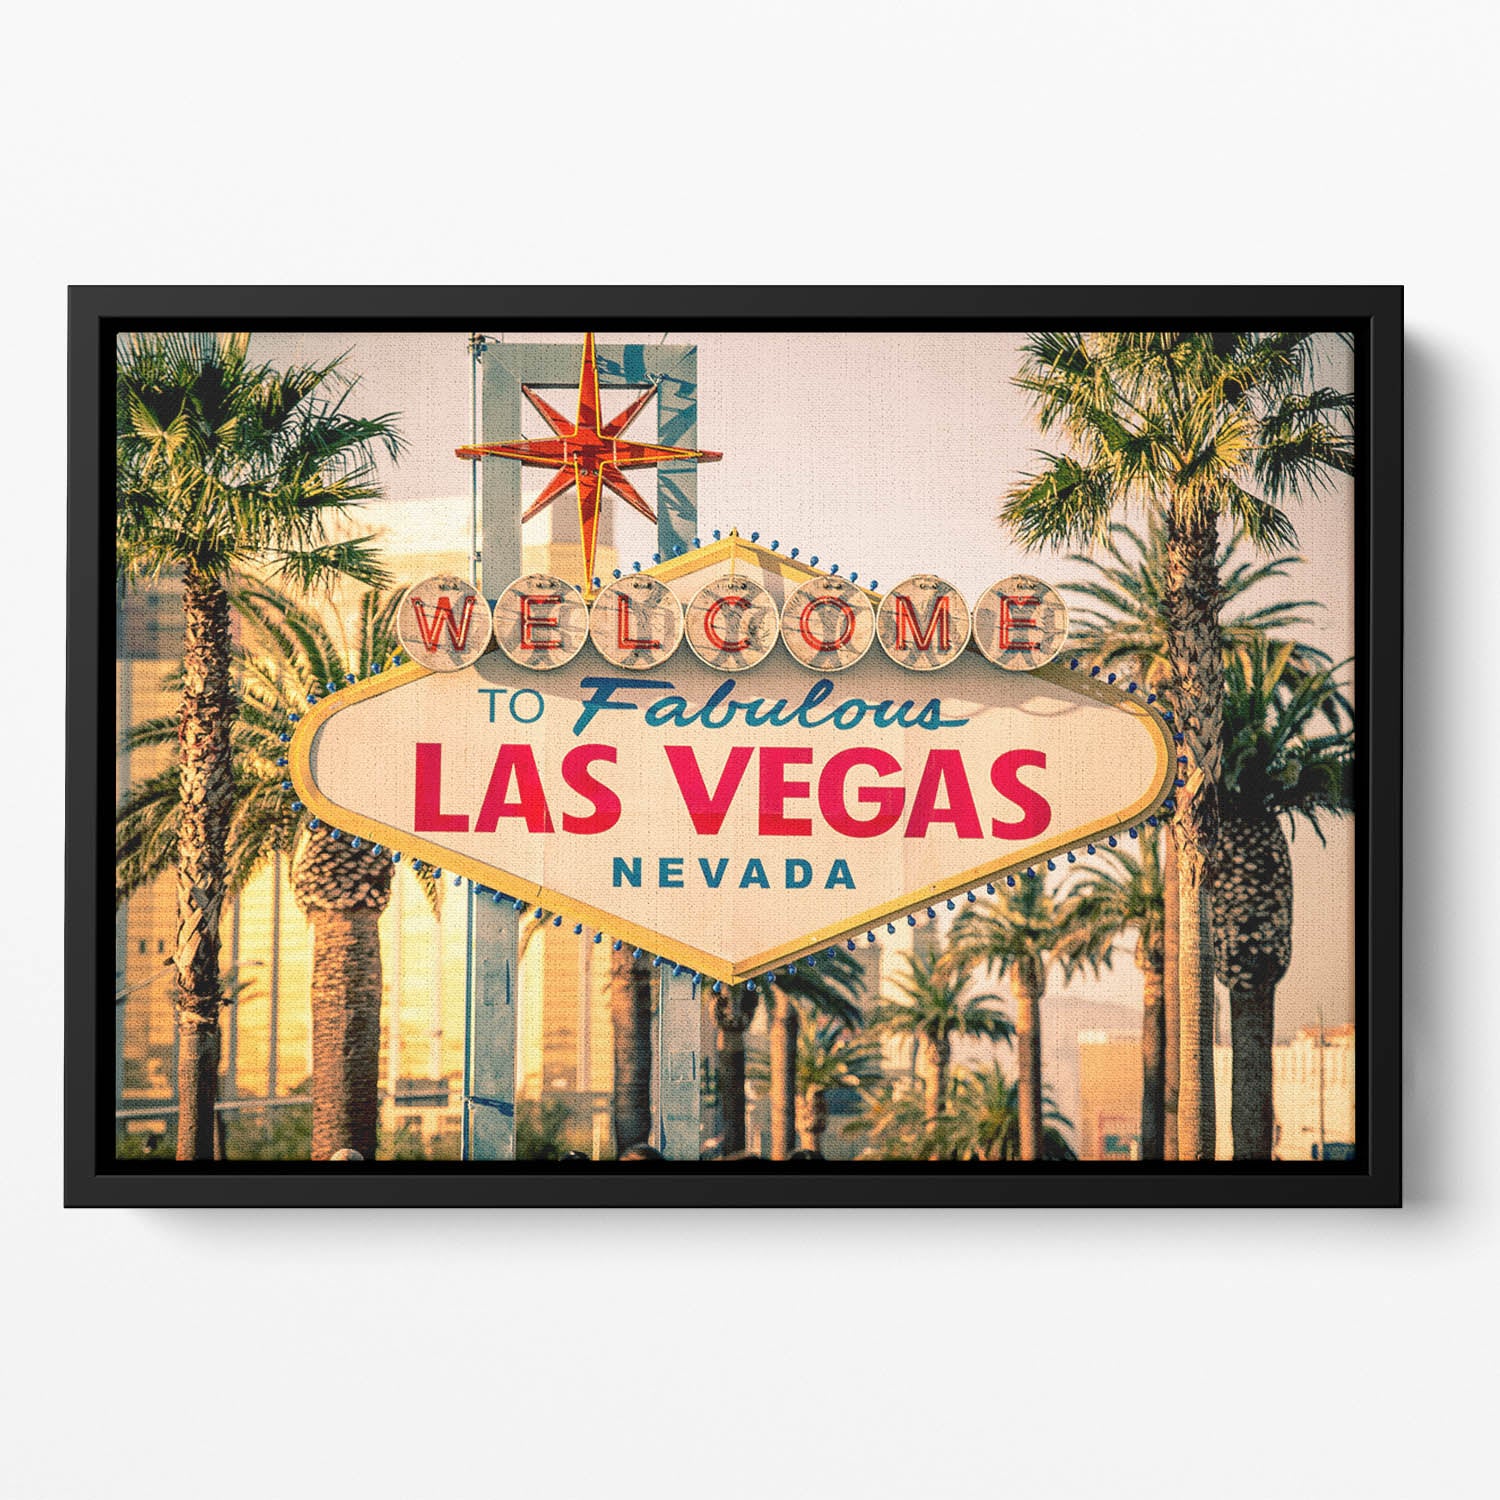 Las Vegas Welcomes You Floating Framed Canvas